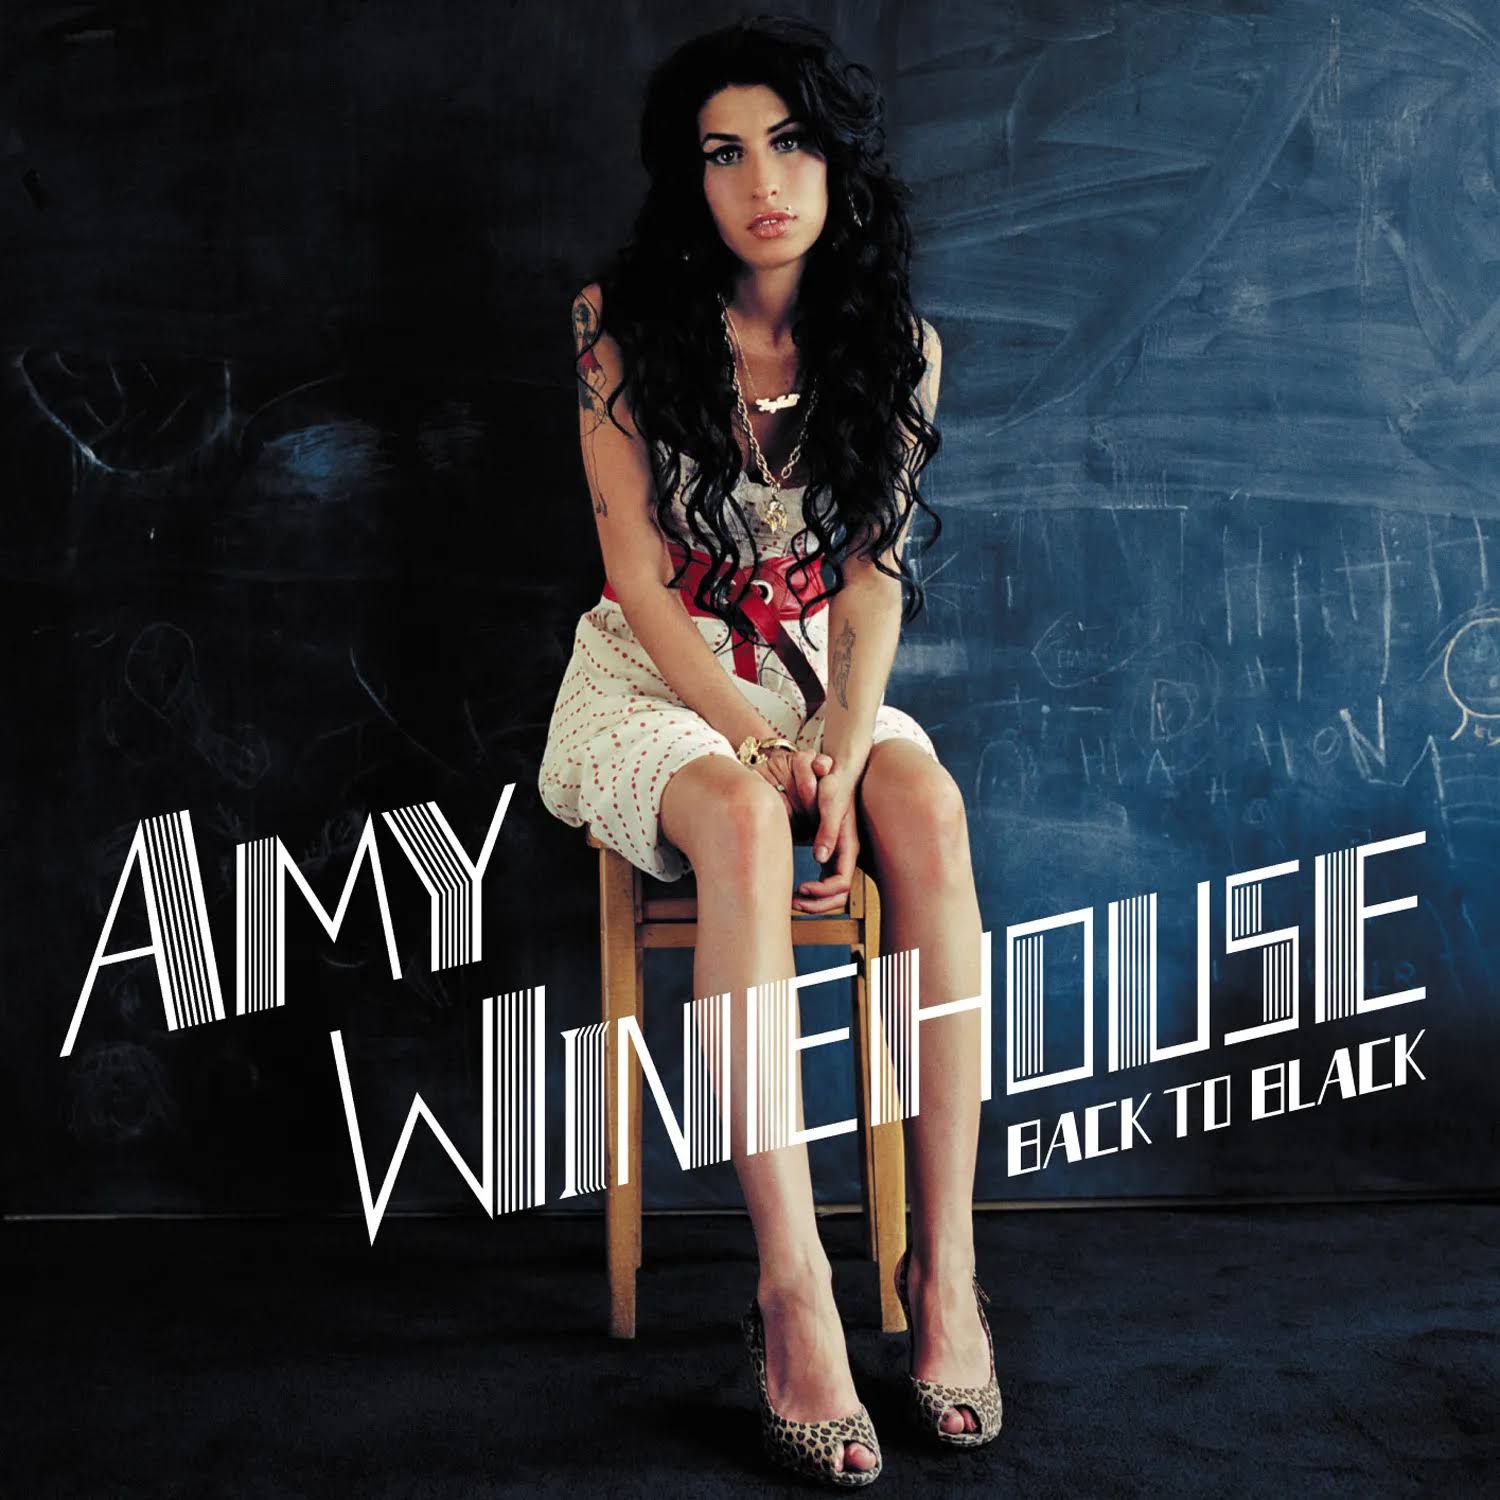 Back to Black Vinyl LP - Amy Winehouse